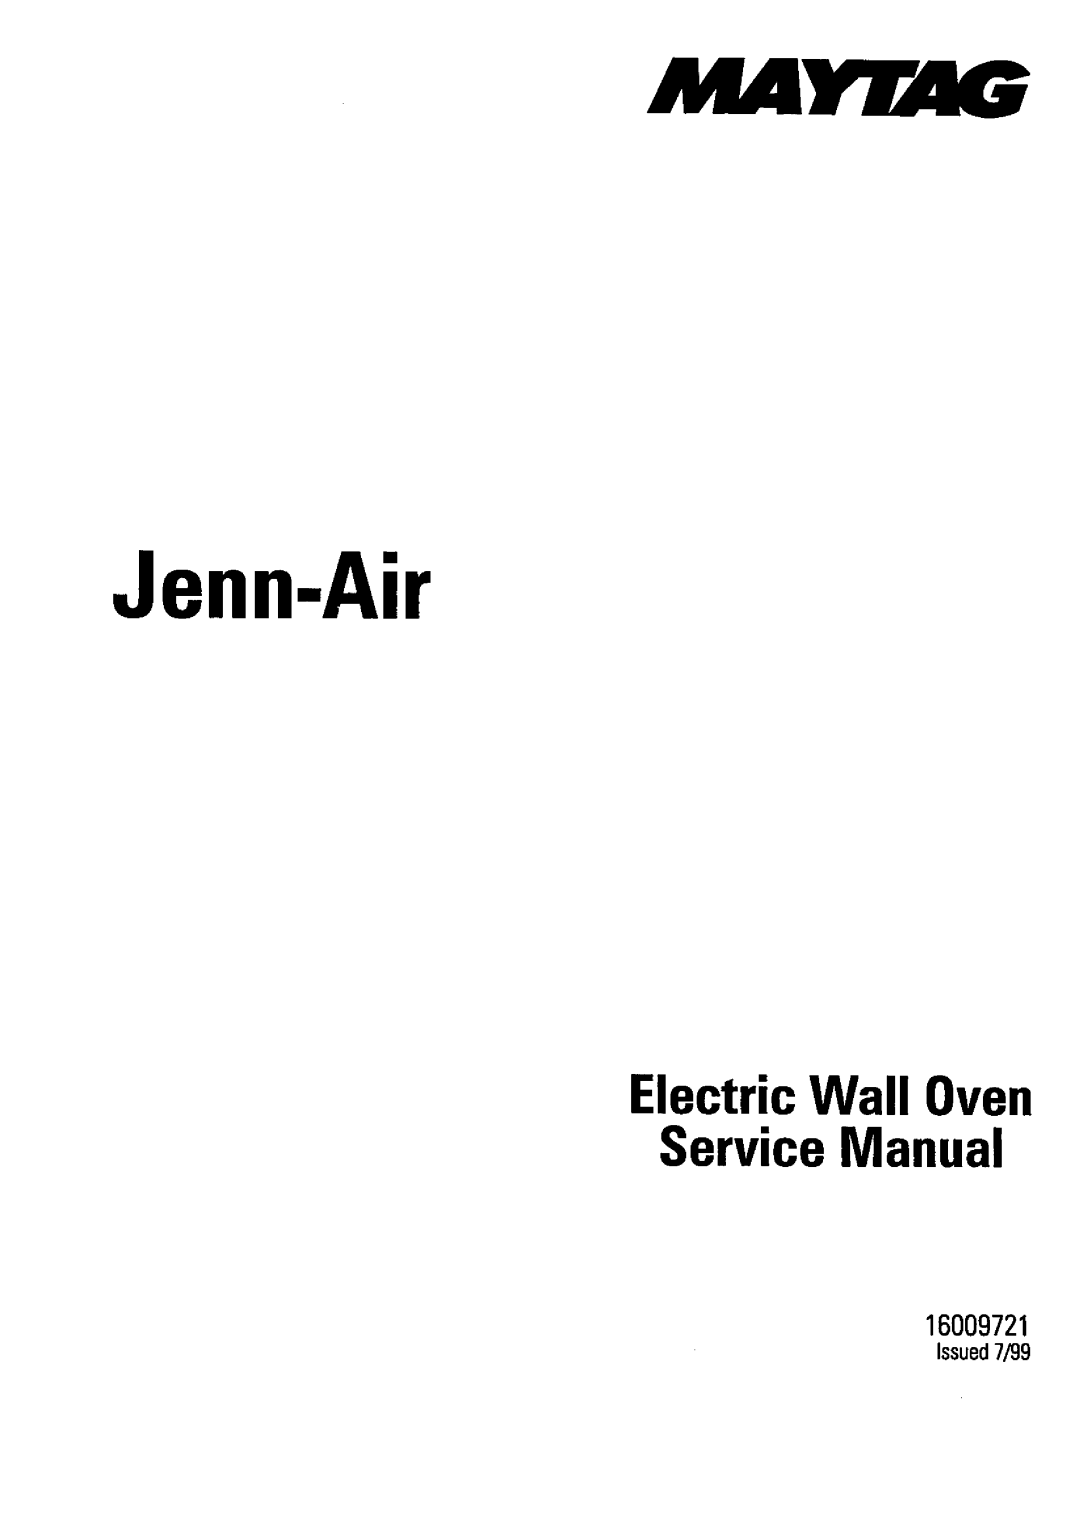 Jenn-Air JJW8627, JJW8530 warranty Jenn-Air Electricwall-Oven, 7ABLEOFCONTENTS, JJW8630, JMW8527, JMW8.530, Ur?lU=JENN-AIR 